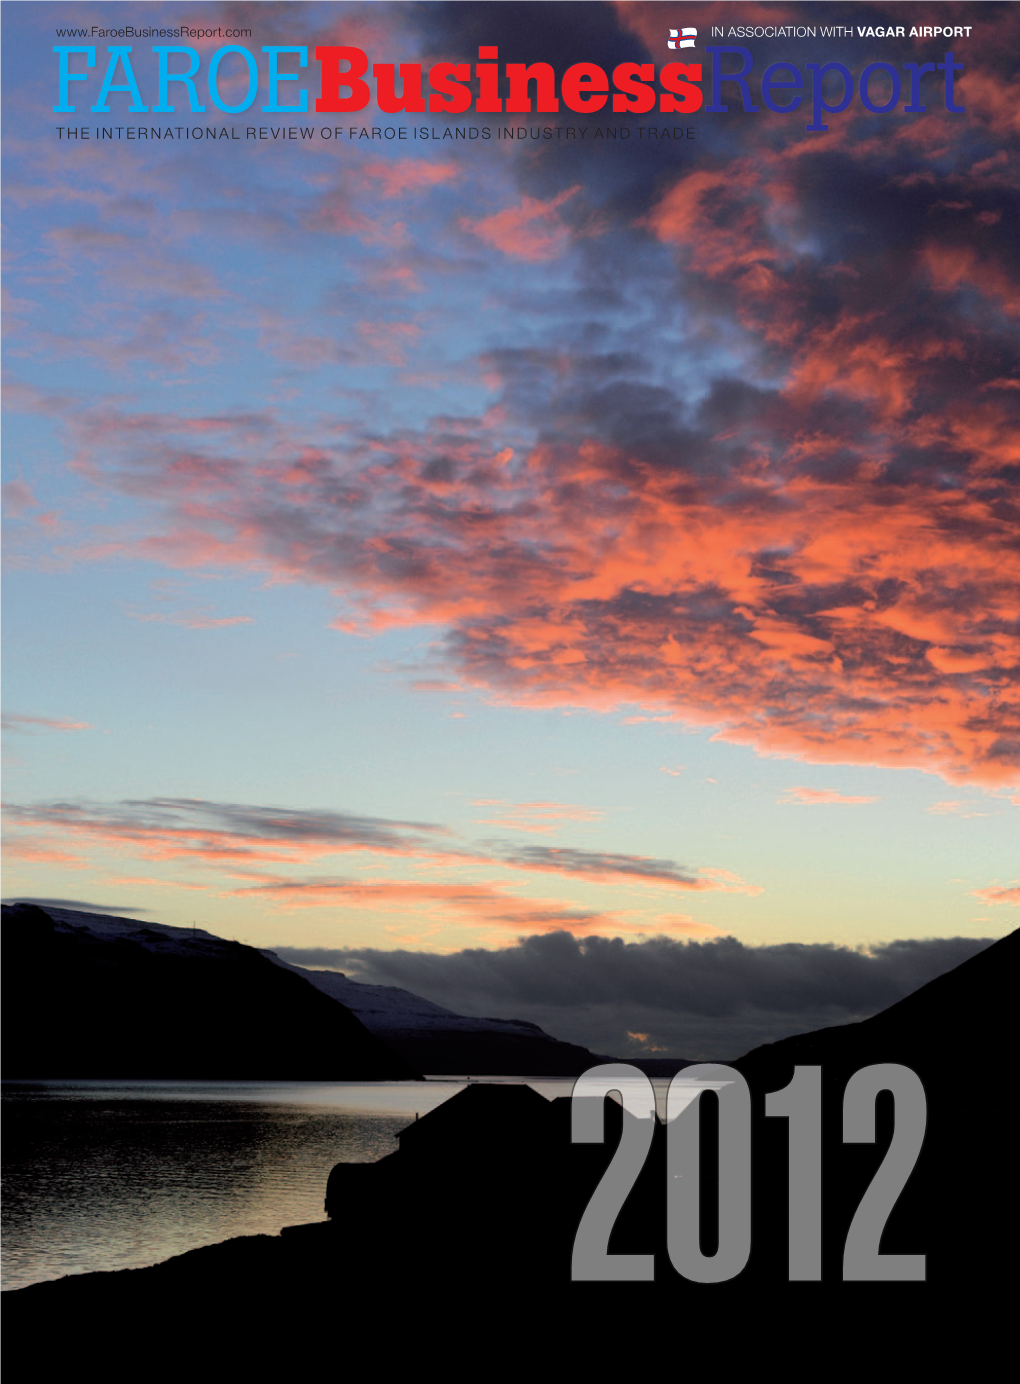 Faroe Business Report 2012 • 3 - HIGHLIGHTS